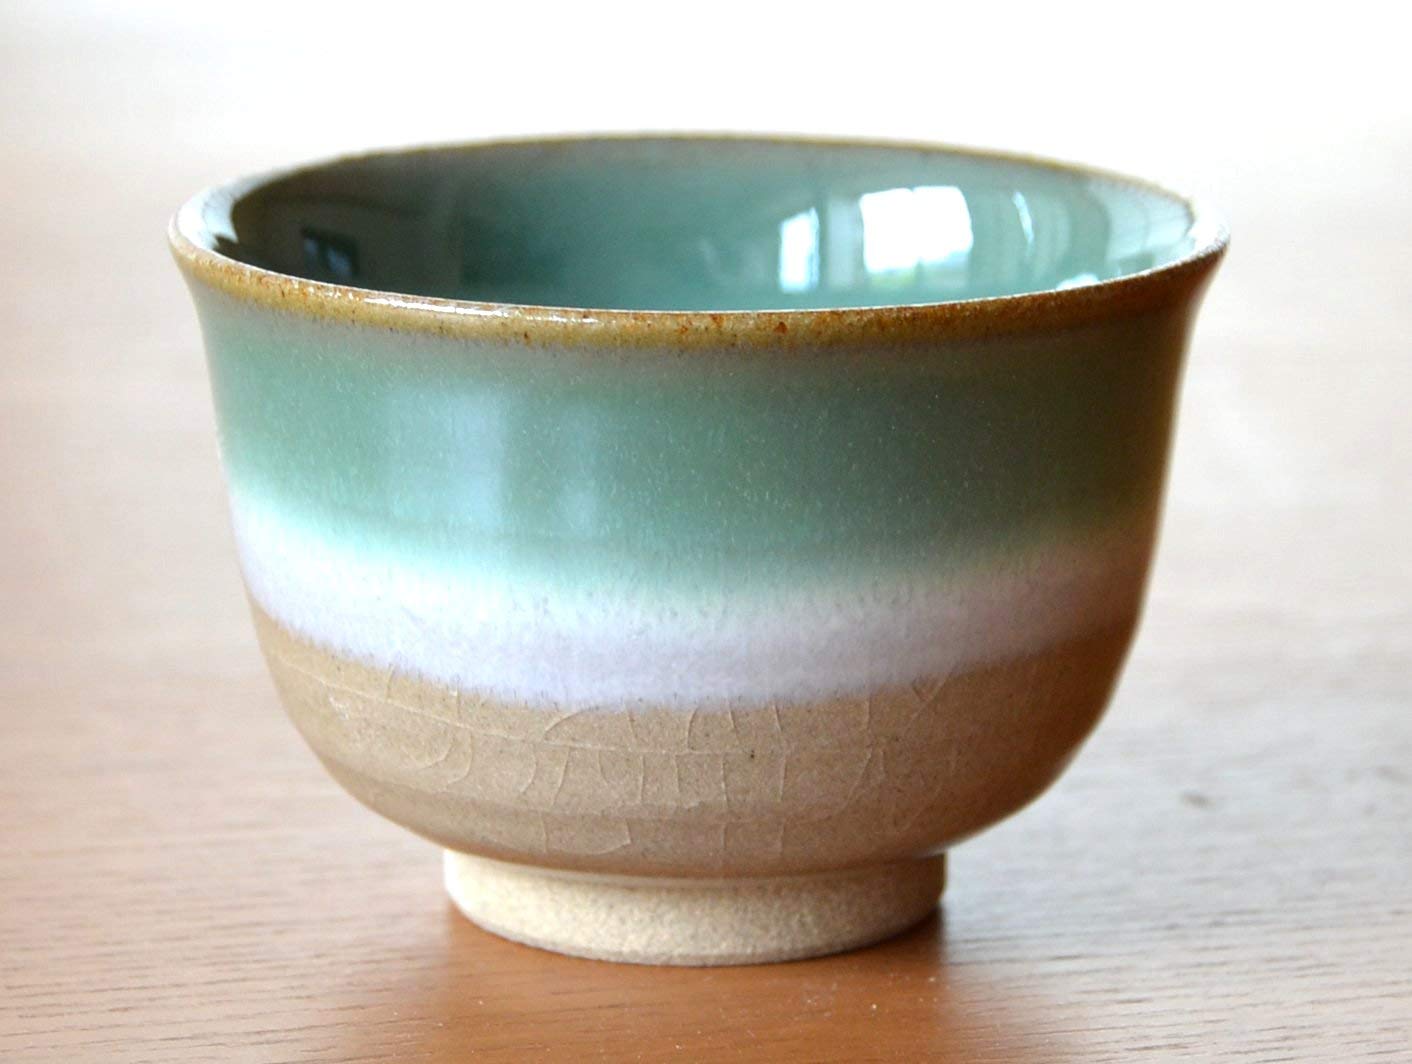 Japanese Tea set Kyusu Traditional Made in Japan Arita Imari ware Ceramic 6 pcs Pottery 1 pc Tea Pot and 5 pcs Cups for Green Tea Banshu